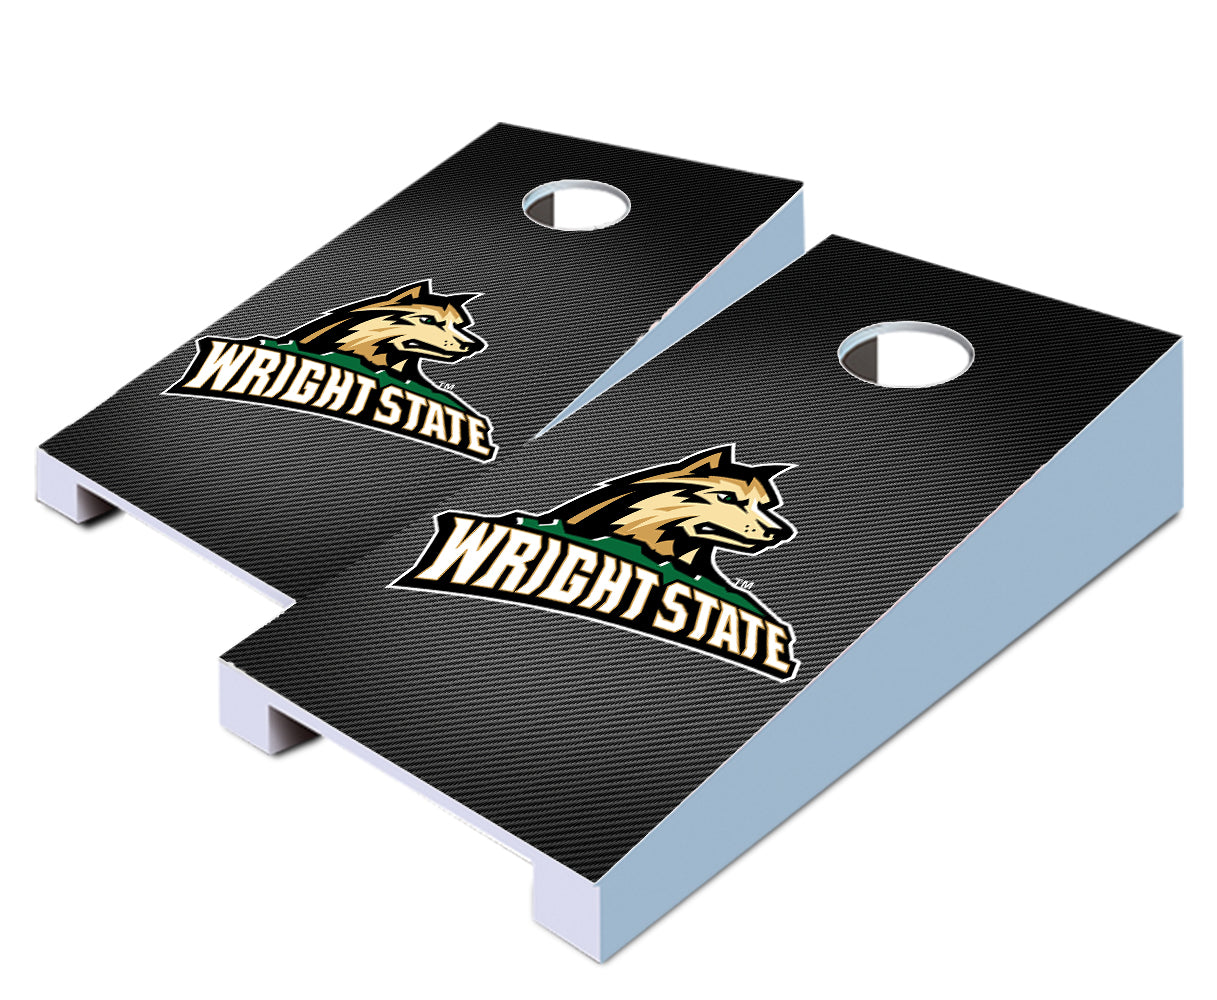 "Wright State Slanted" Tabletop Cornhole Boards